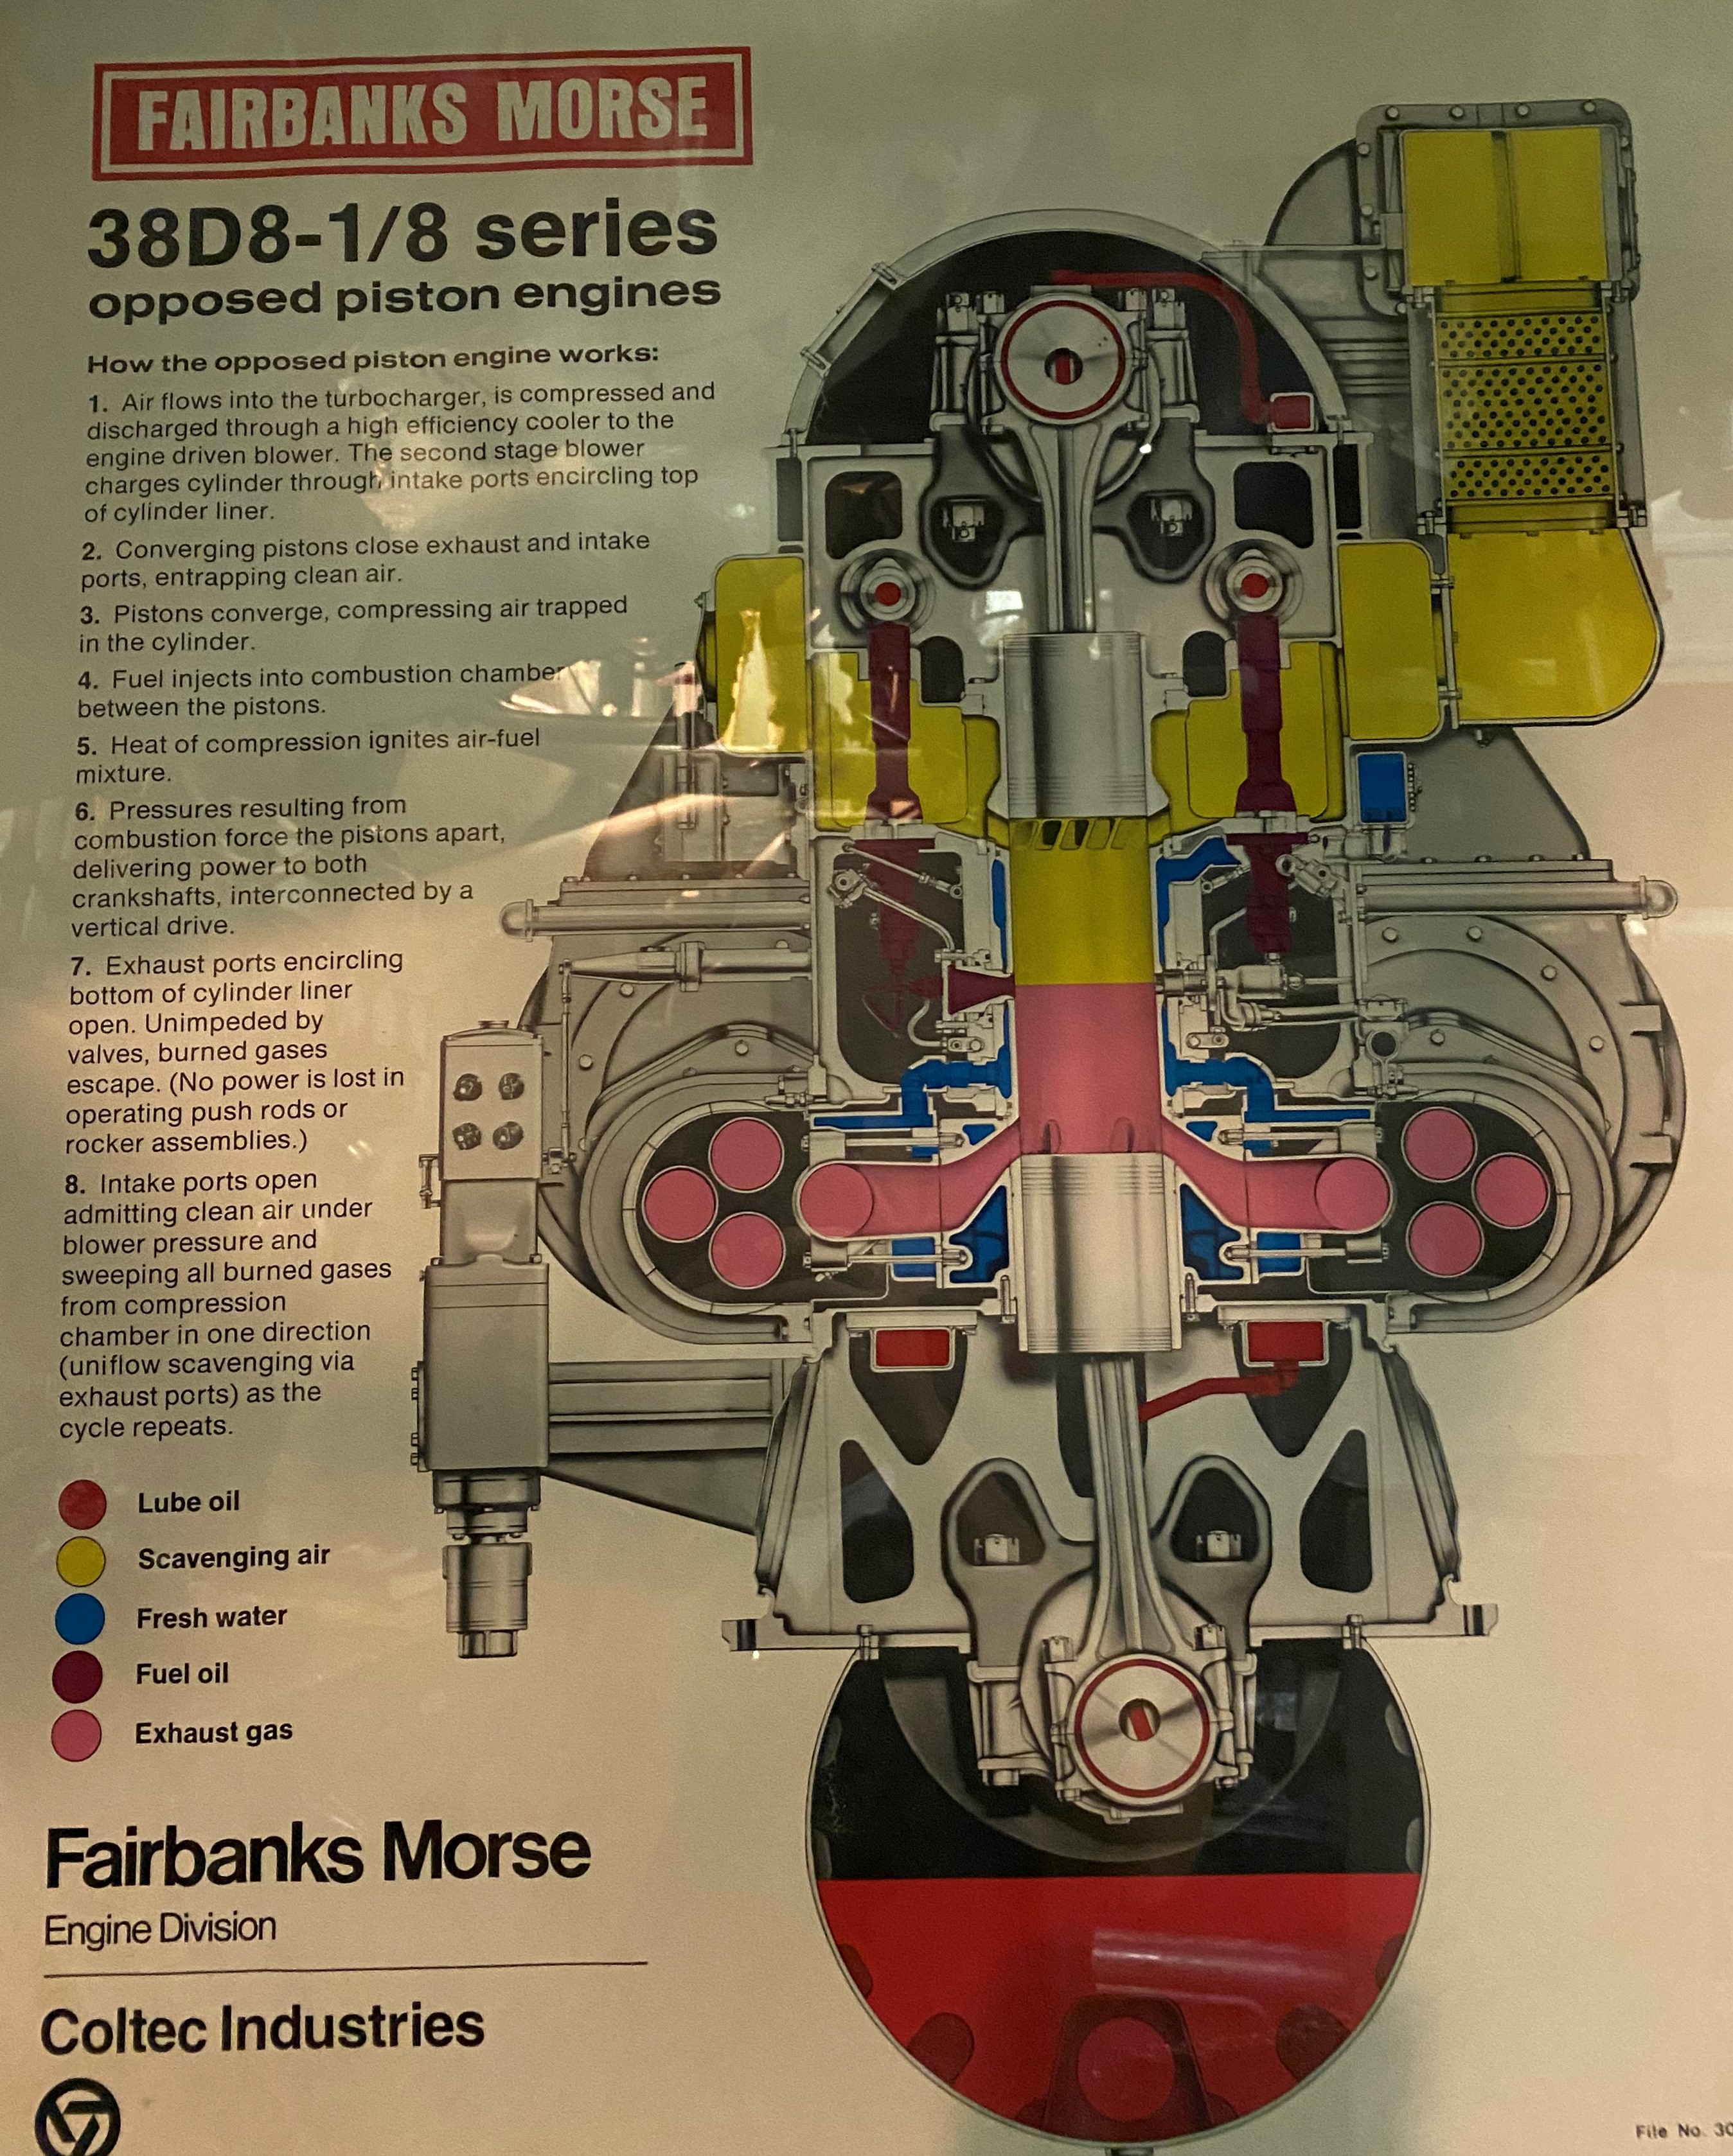 Fairbanks Morse 38D 8-1/8 Diesel Engine: A Versatile Powerhouse